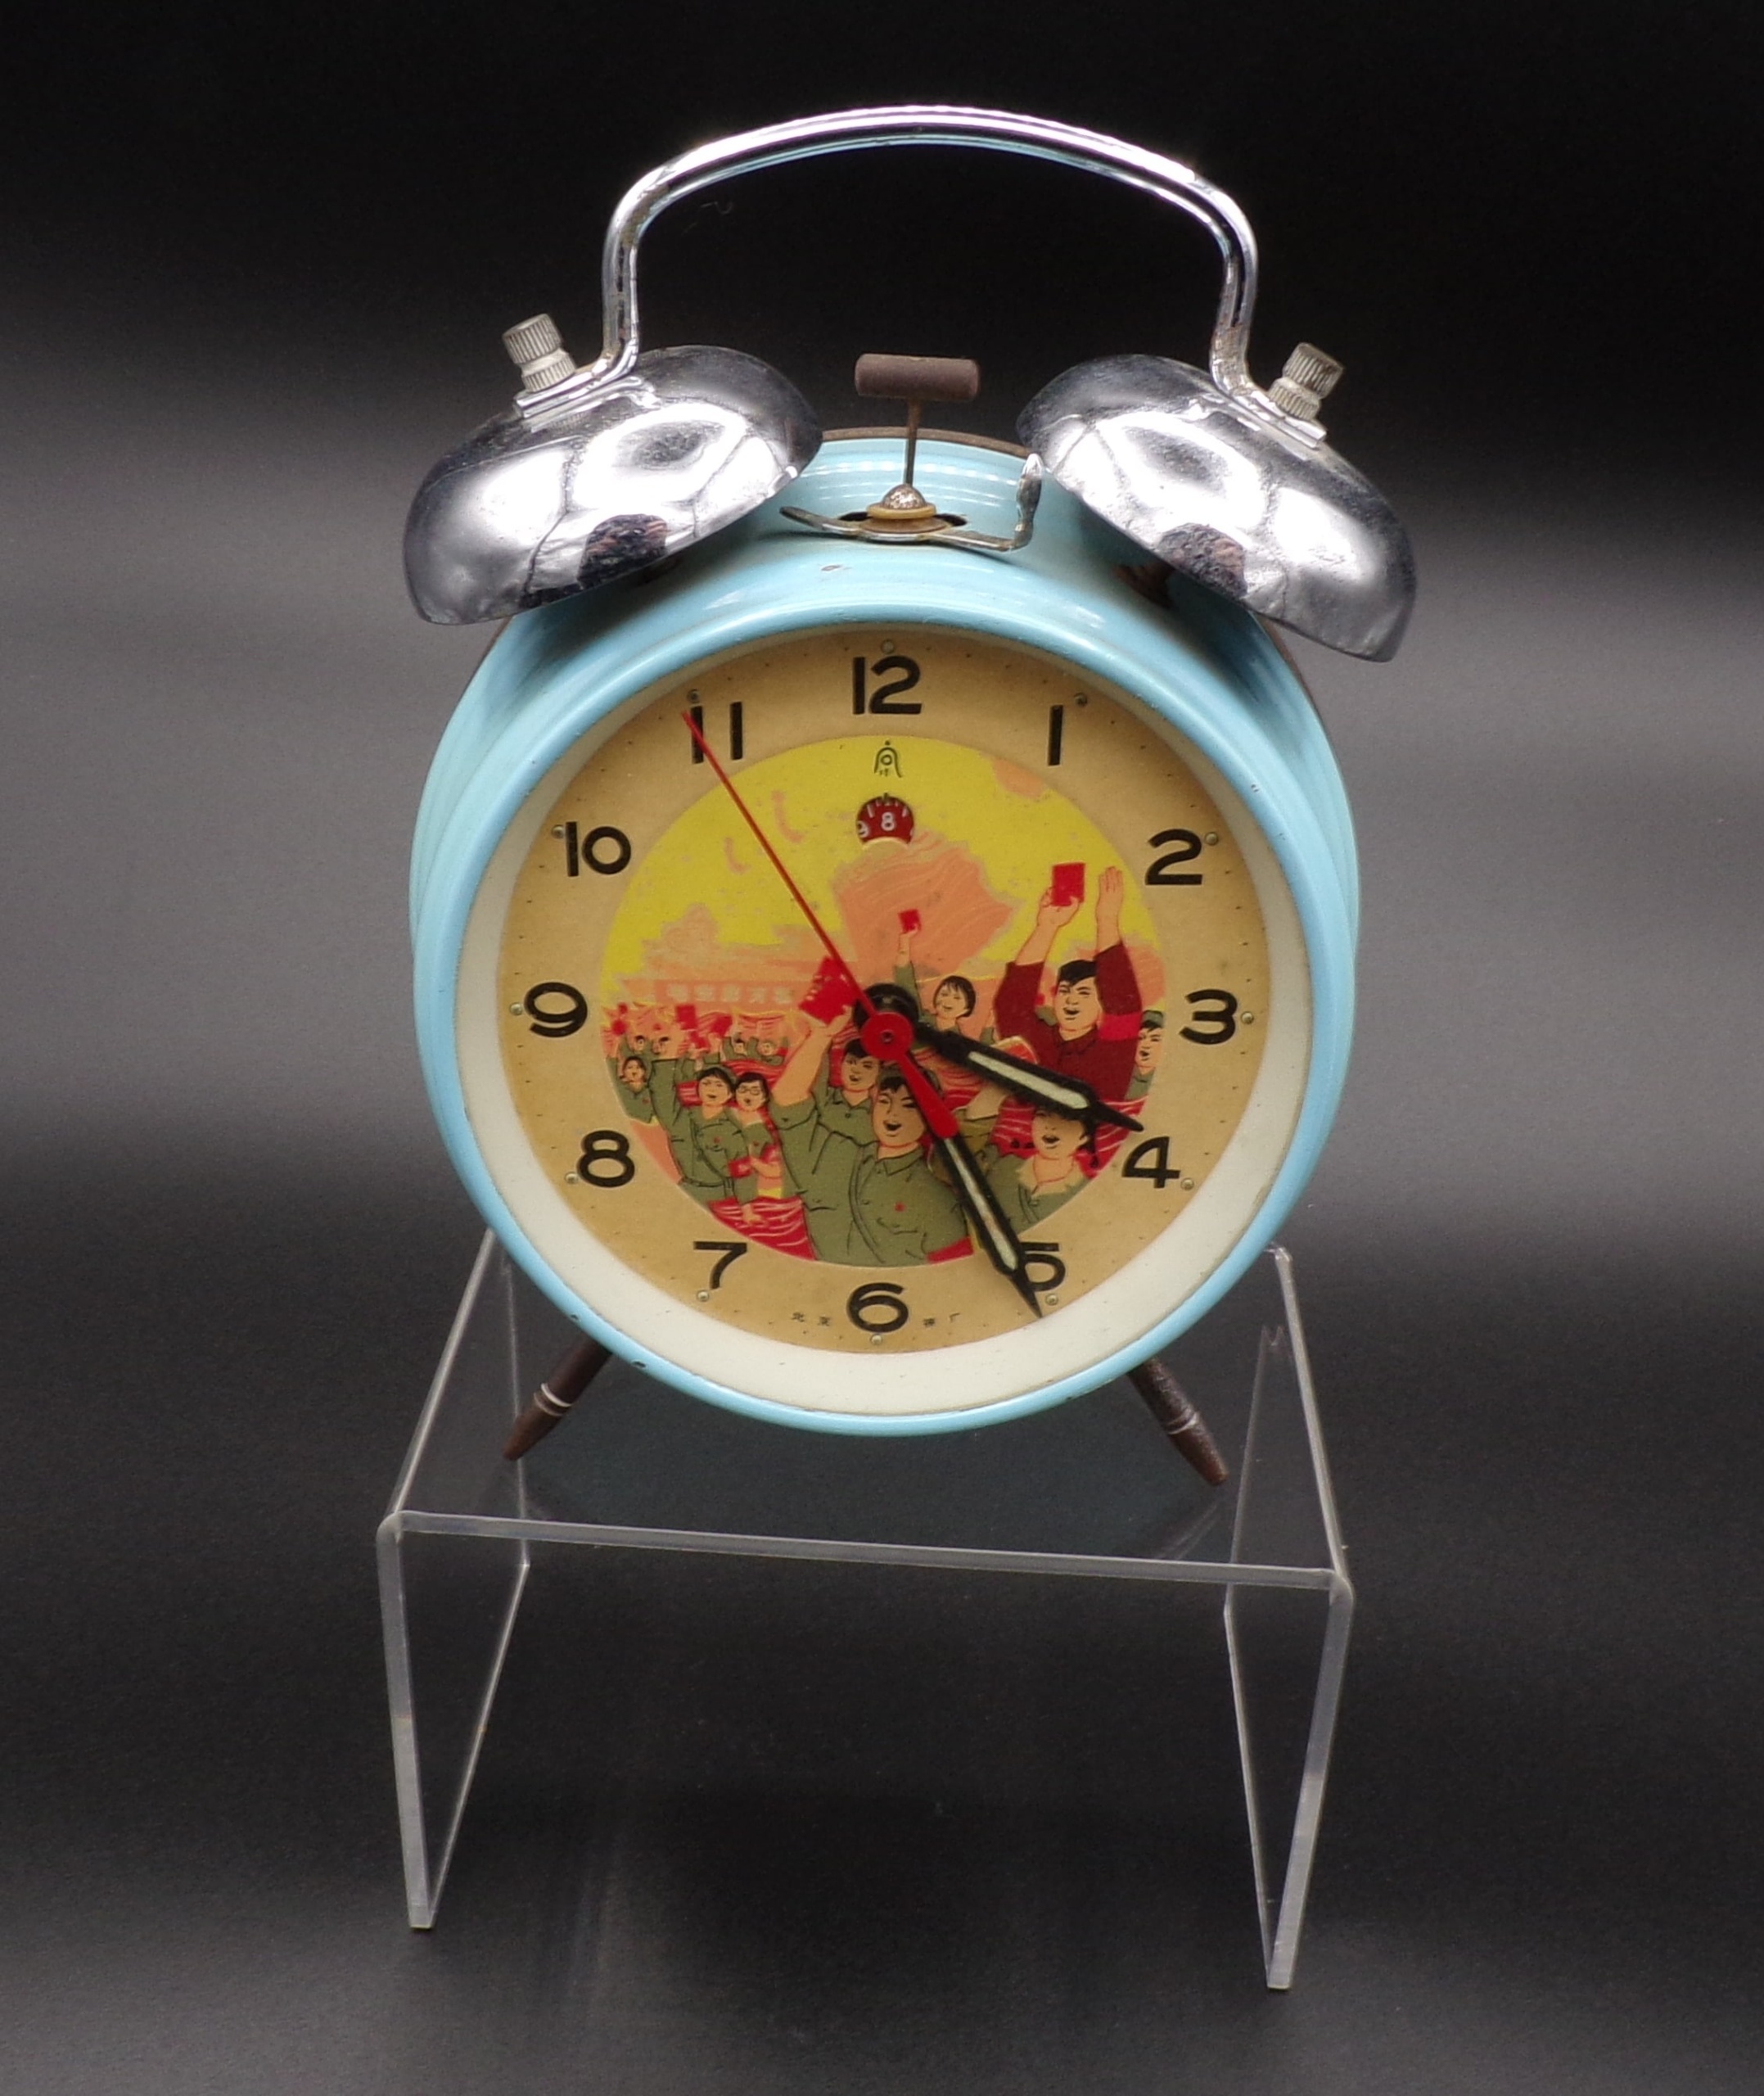 Alarm Clock with Animated Arm  革命闹钟